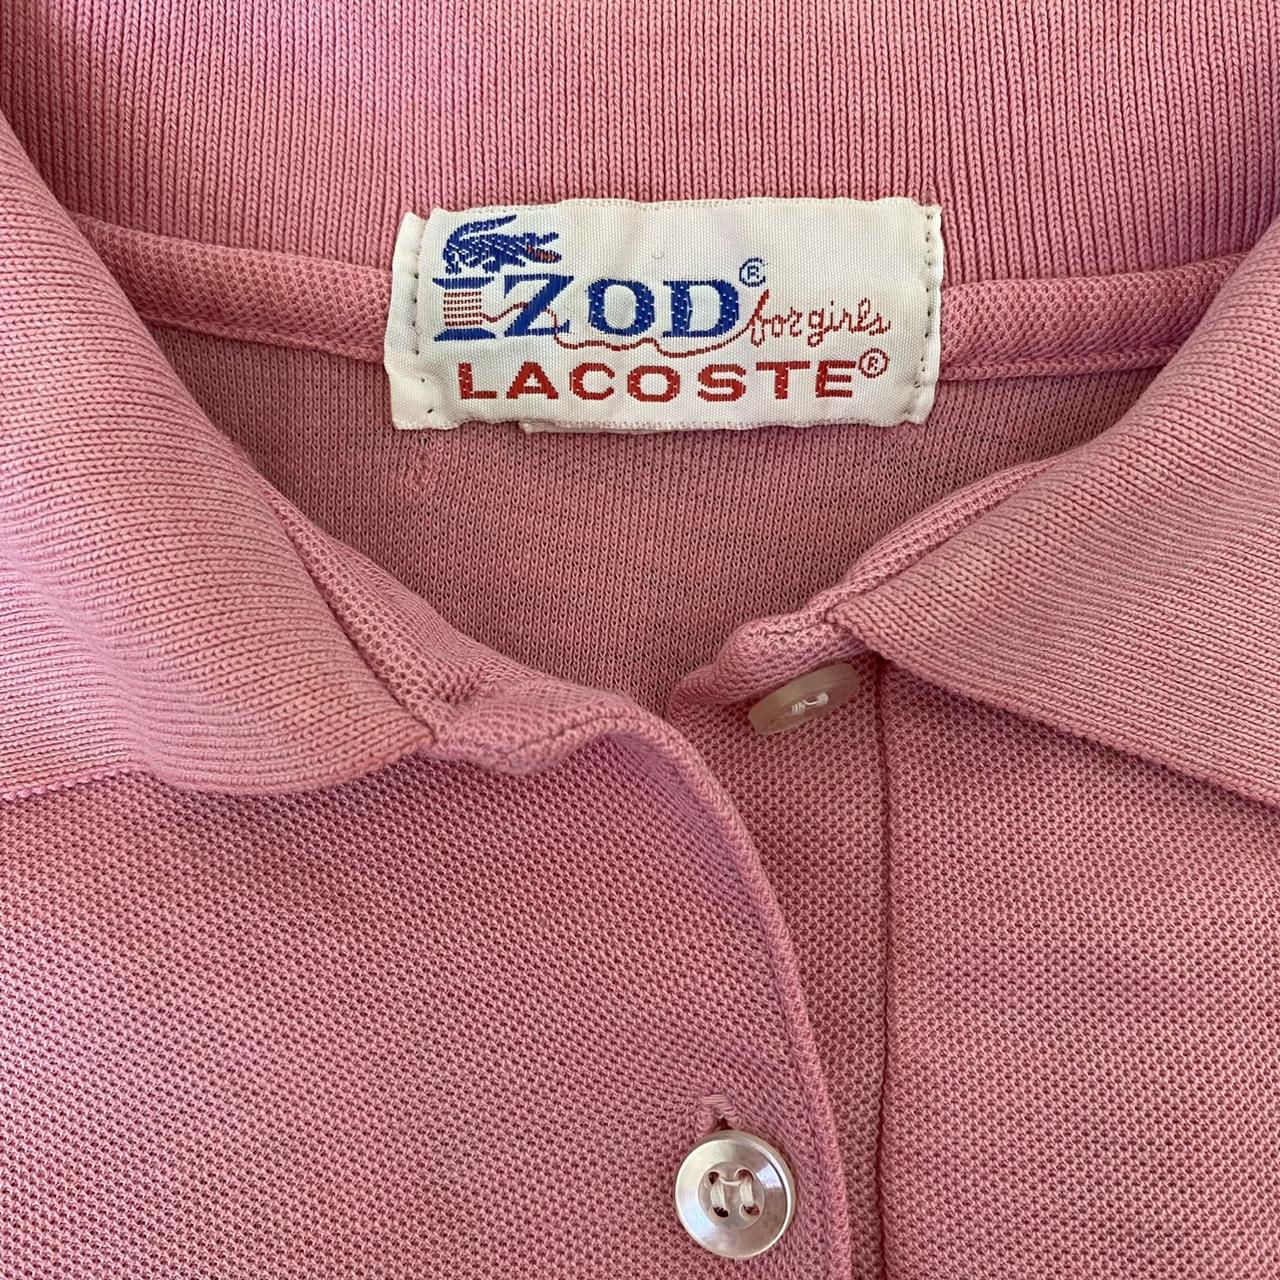 Lacoste polo - genuine girls pink 🐊... shirt for Depop Vintage